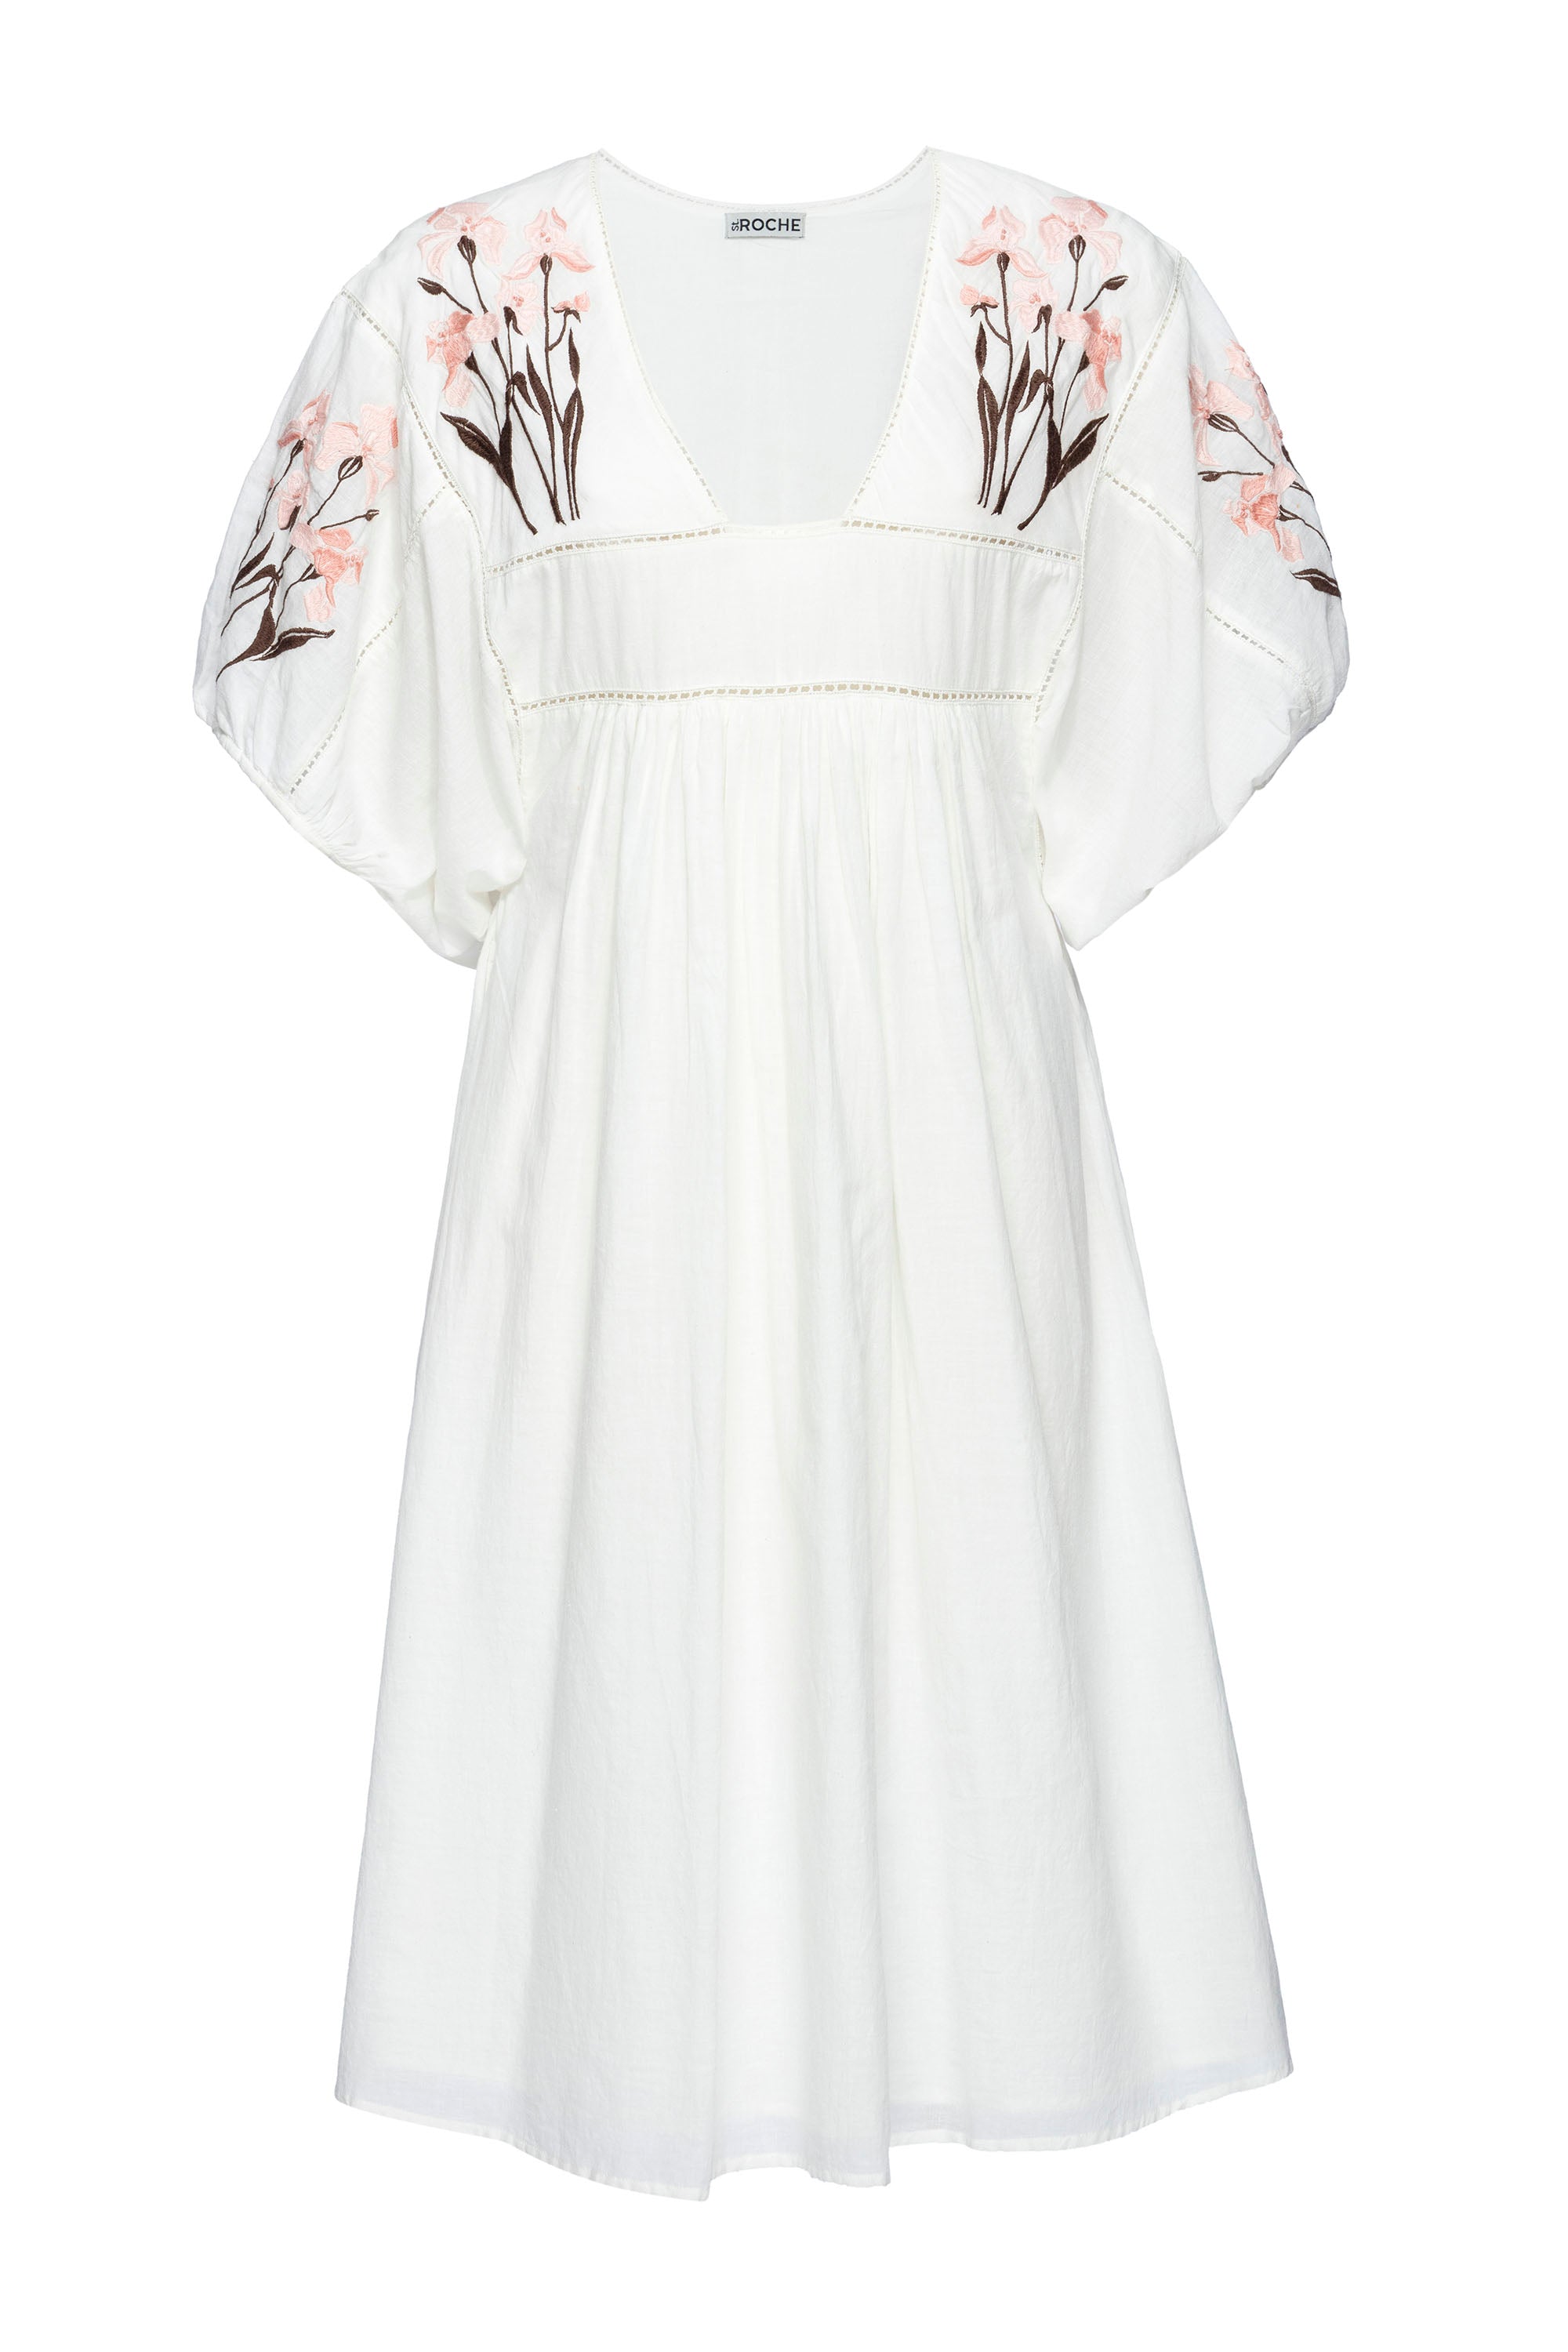 Women’s White Lake Dress - Ivory Large St. Roche